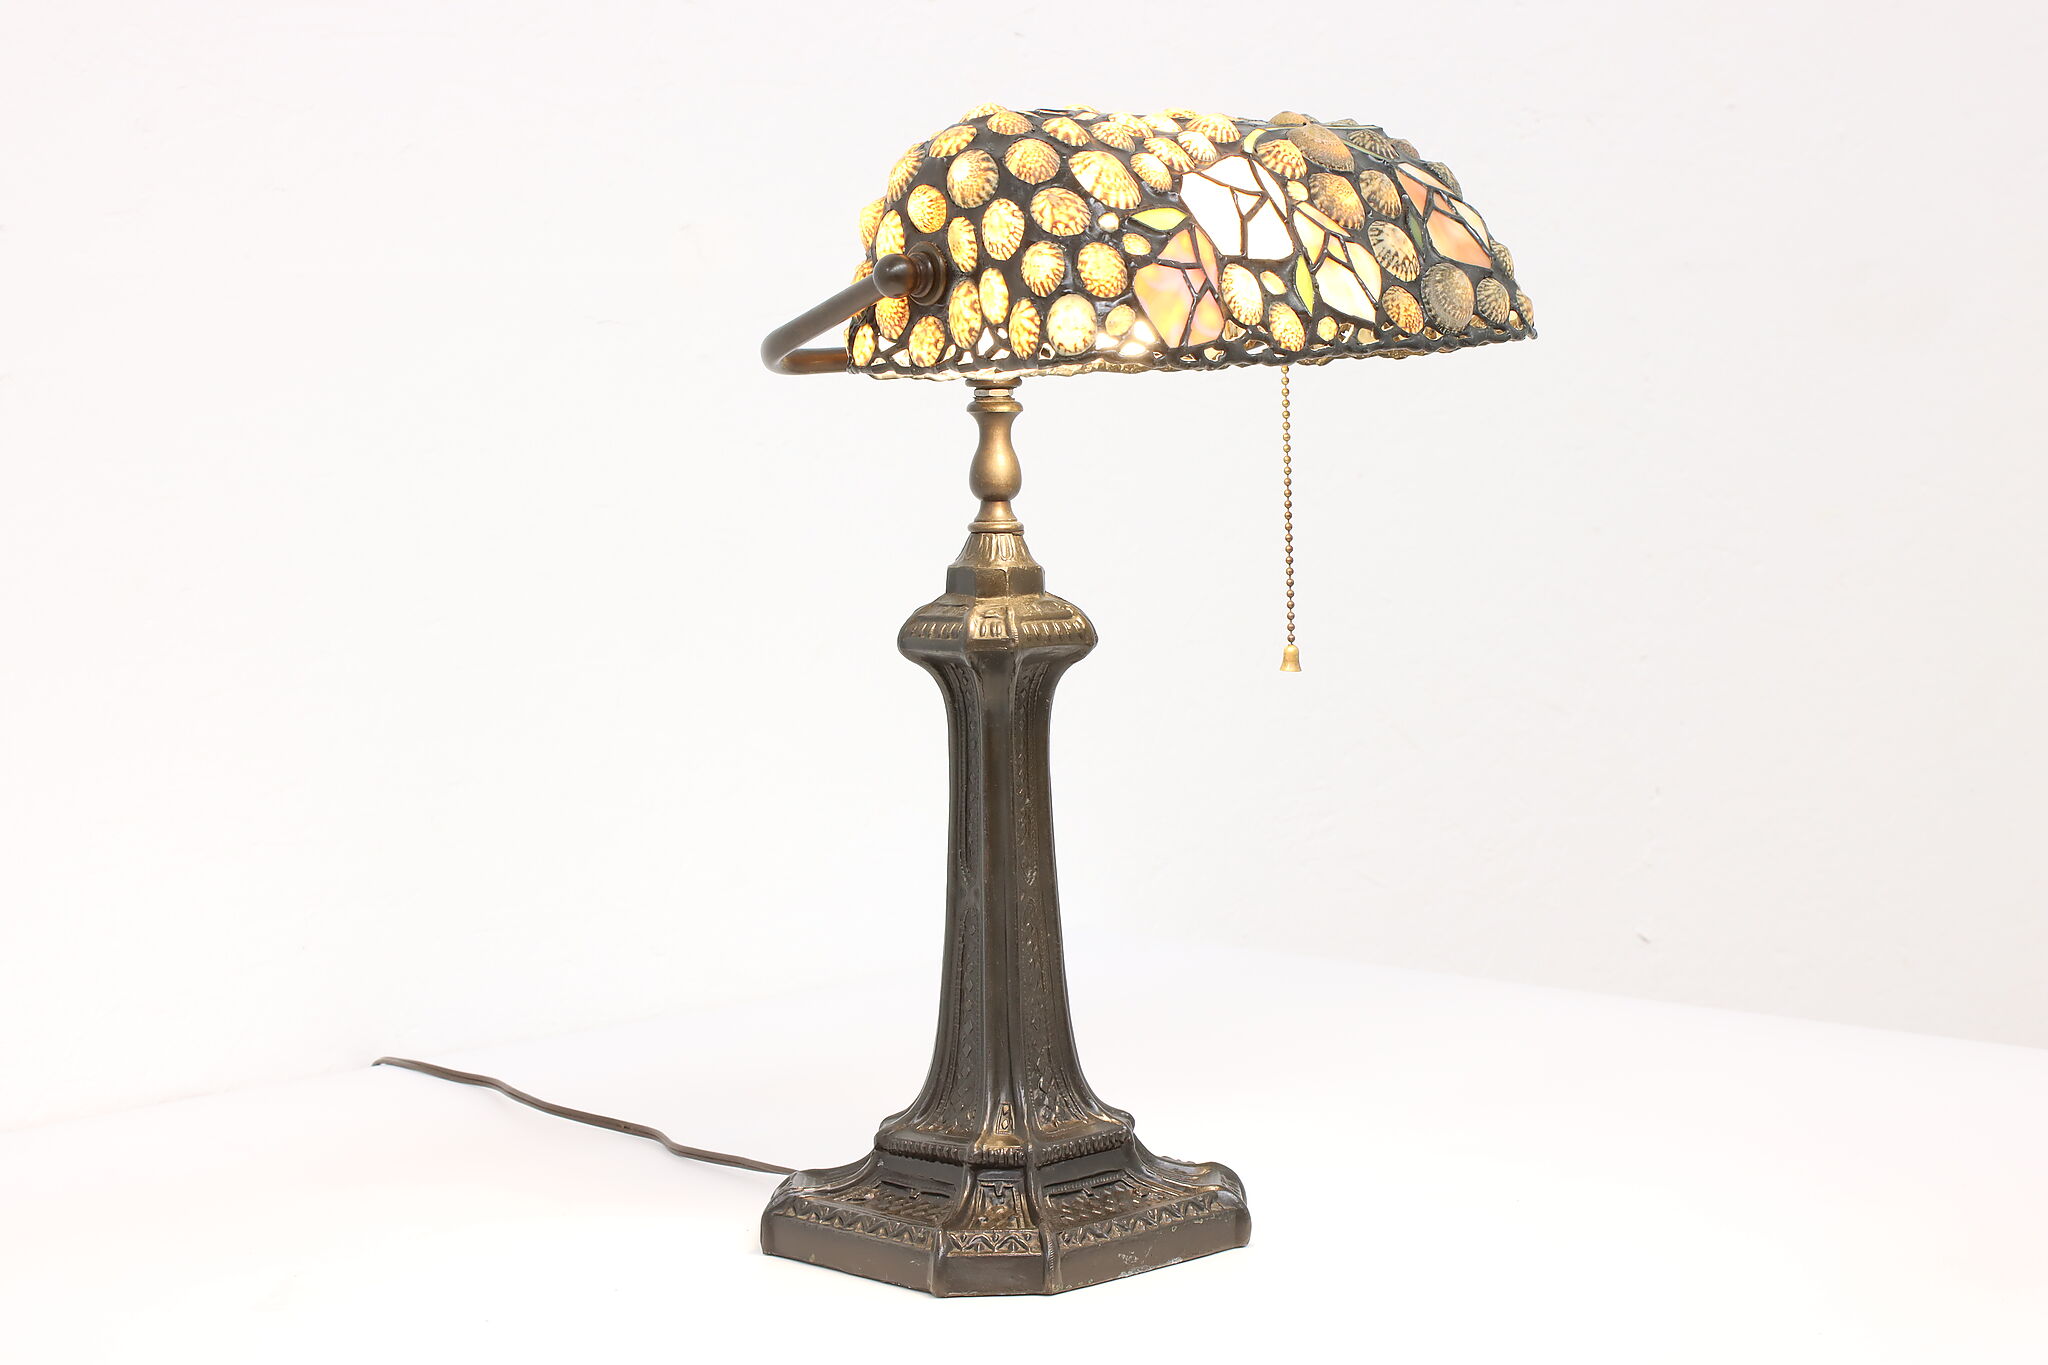 Stratford on Avon Vliegveld Reclame Stained Glass & Shell Shade Vintage Desk Lamp